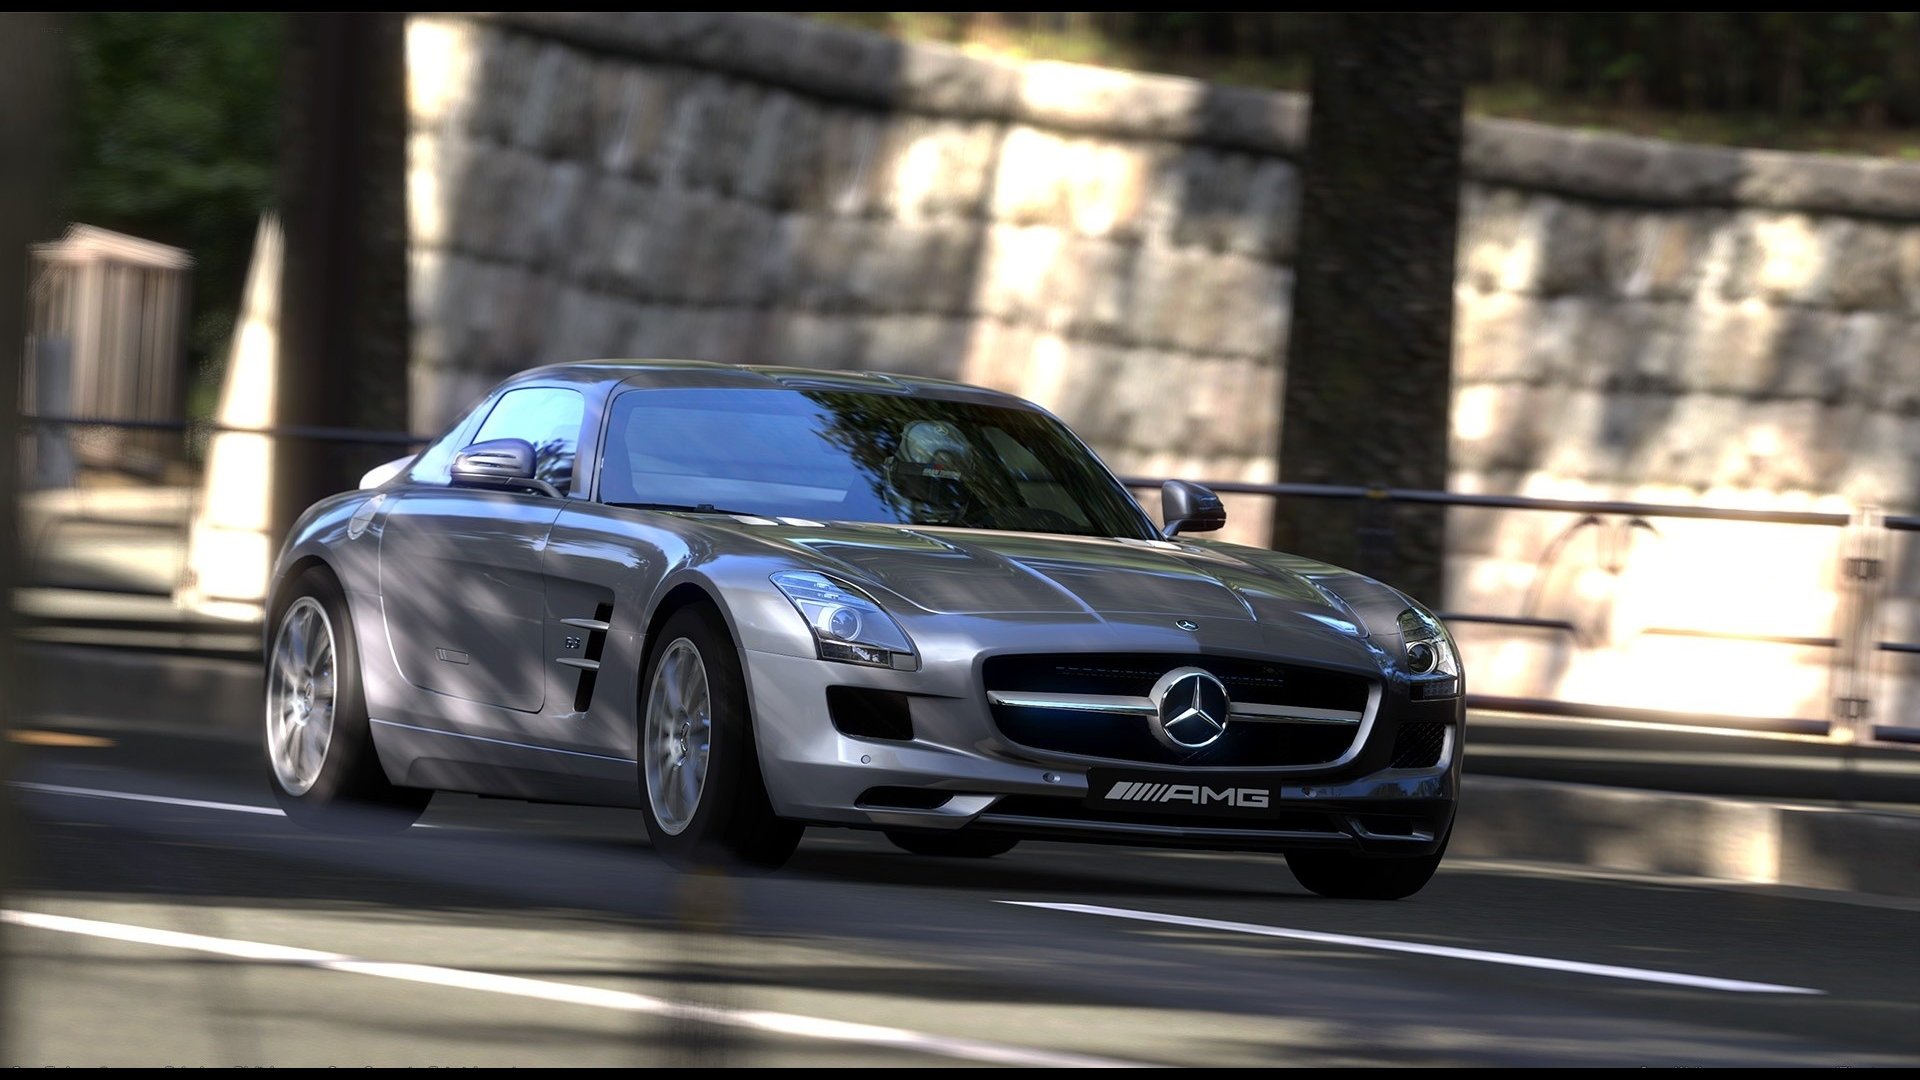 Download full hd 1080p Gran Turismo 5 desktop background ID:73630 for free